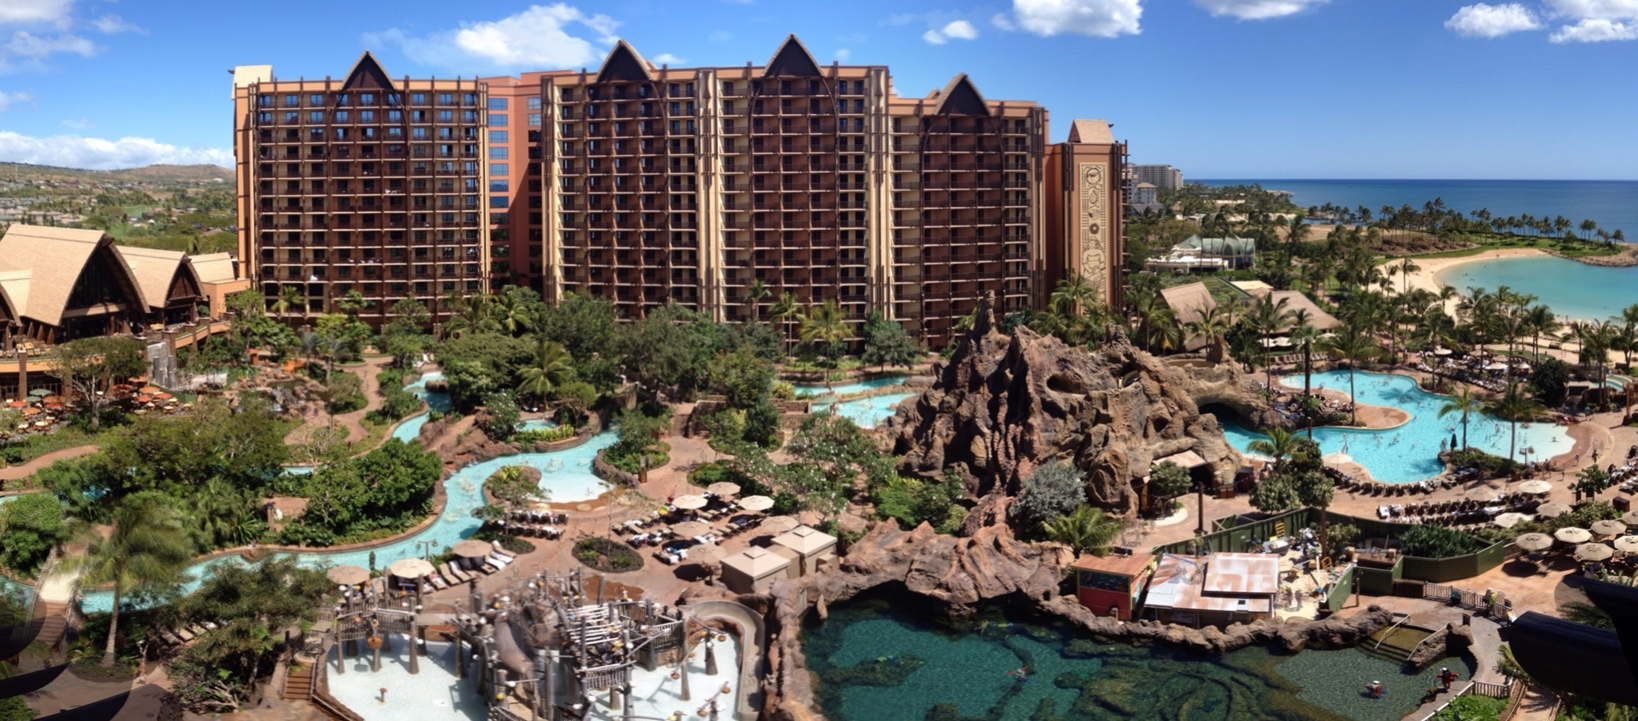 Aulani: A Disney Resort & Spa